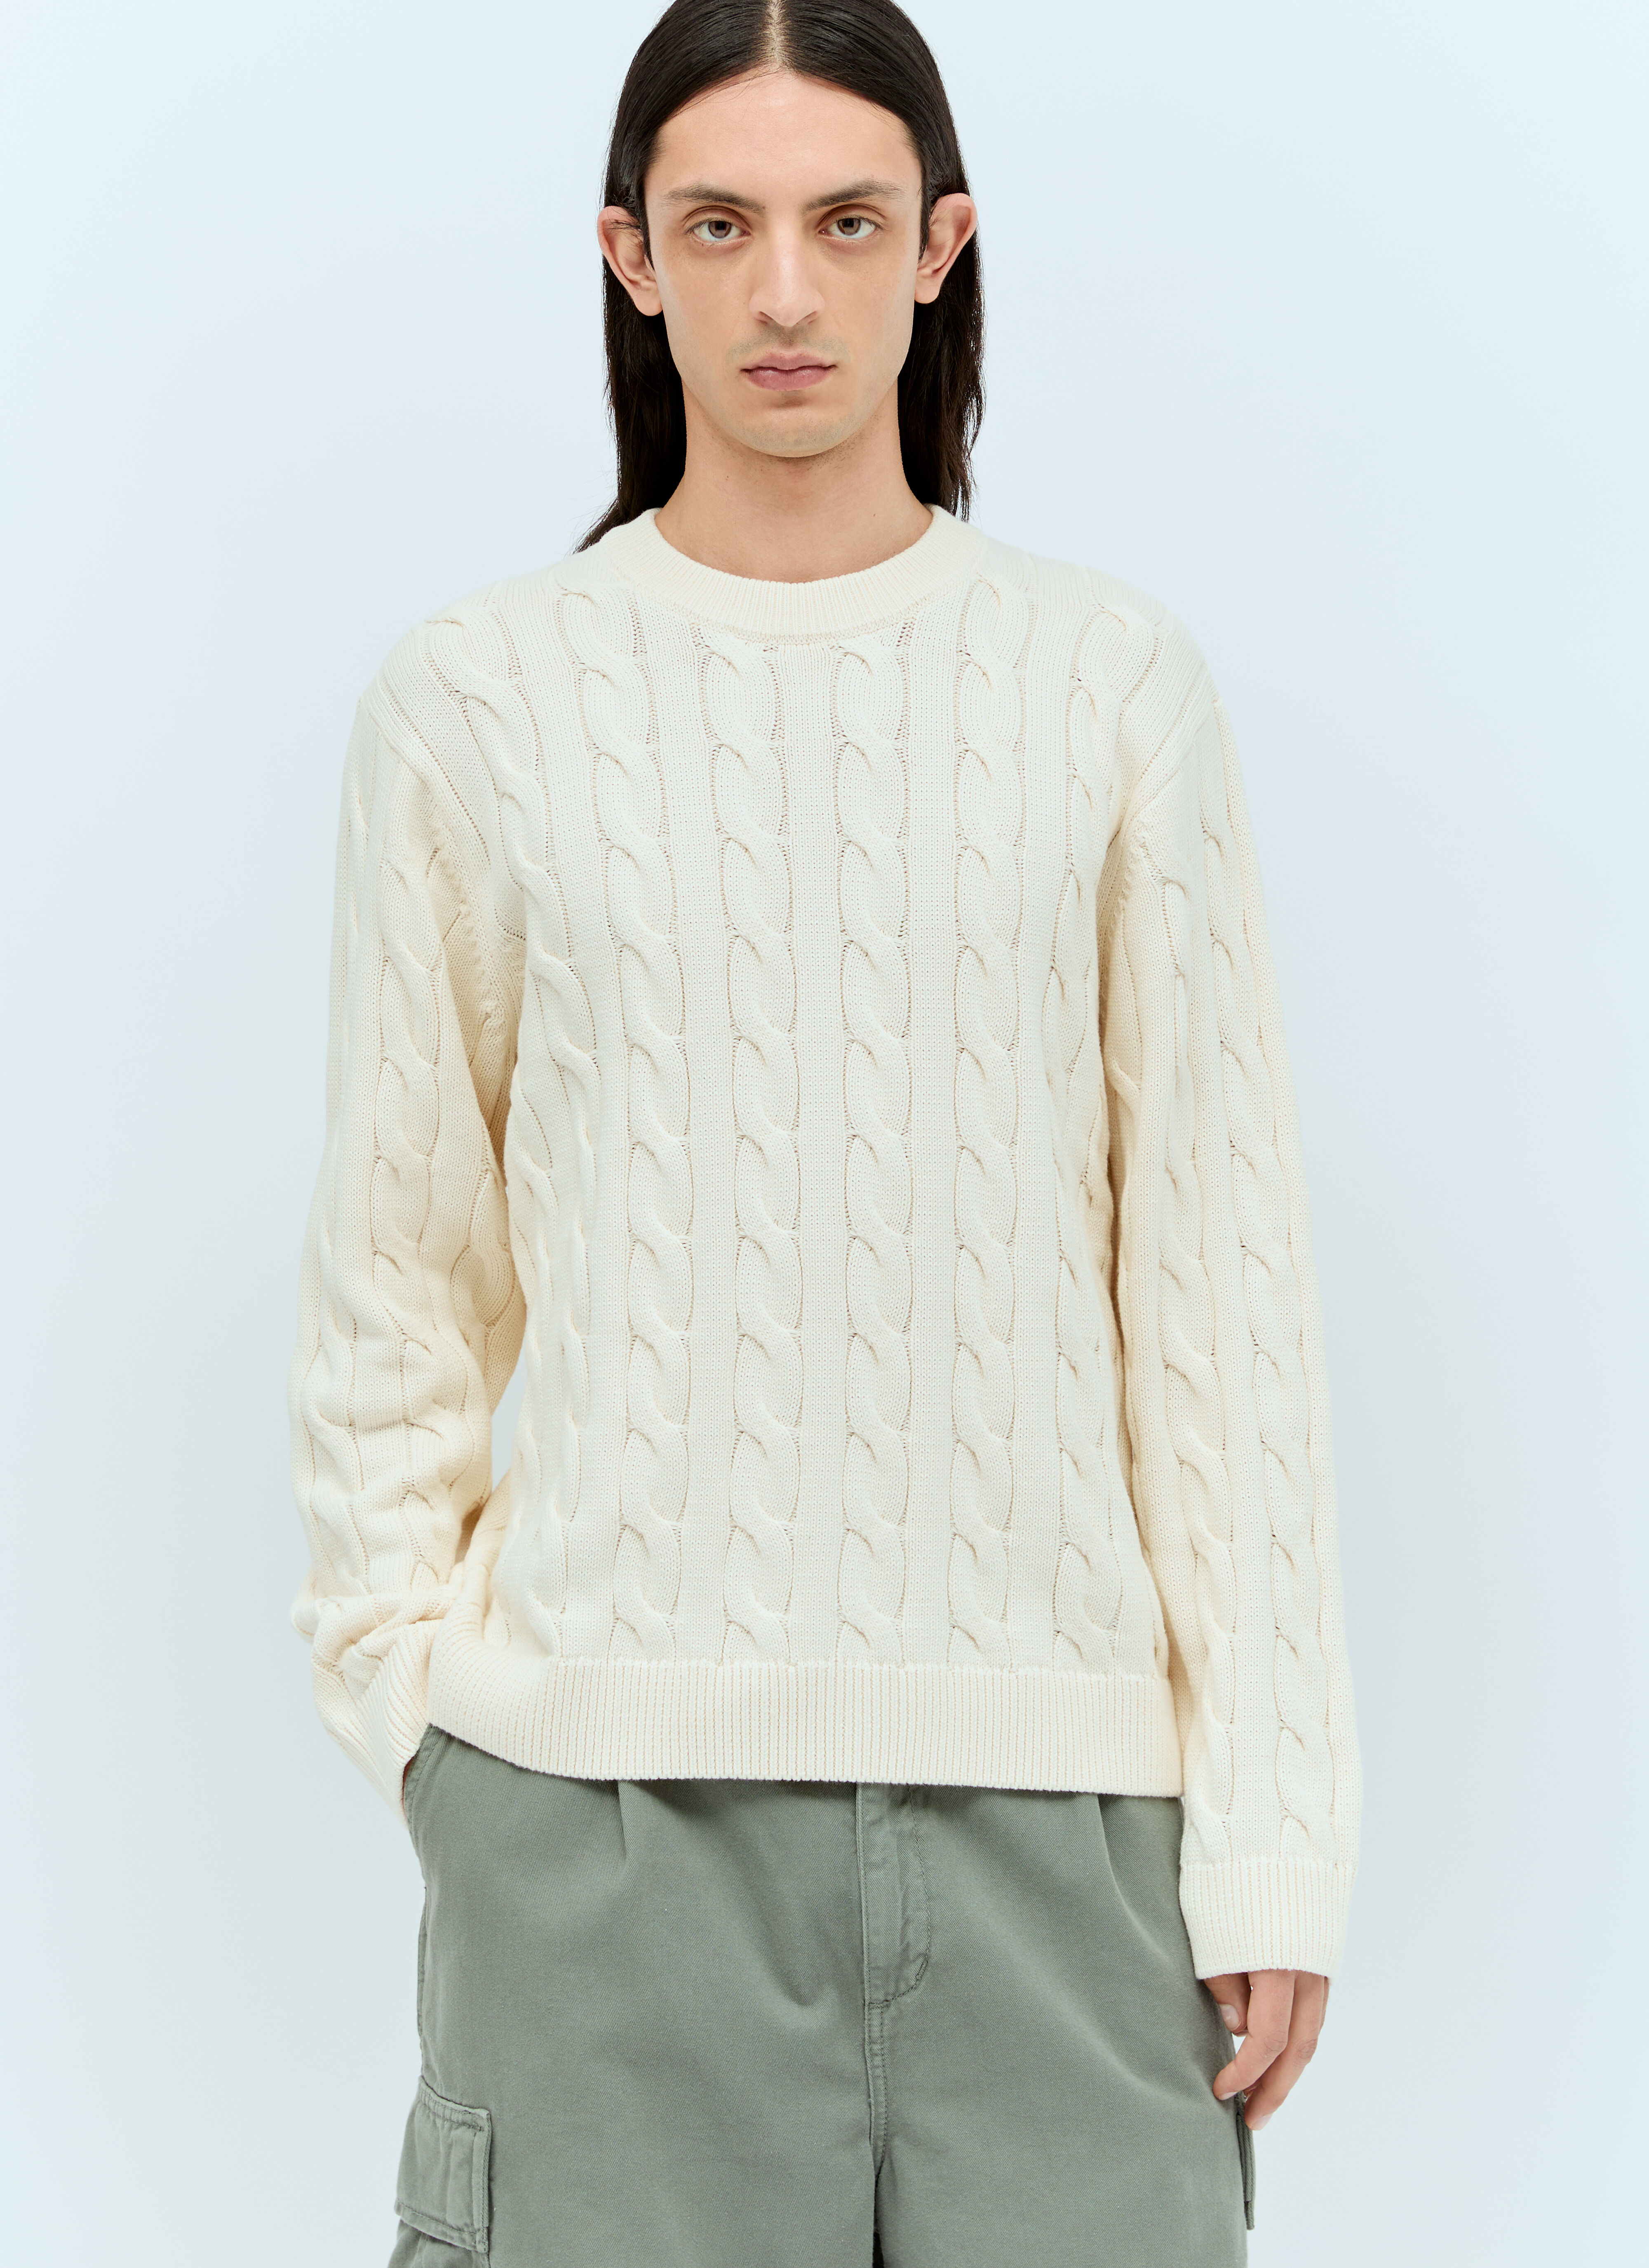 Carhartt WIP Cambell Sweater White wip0156011